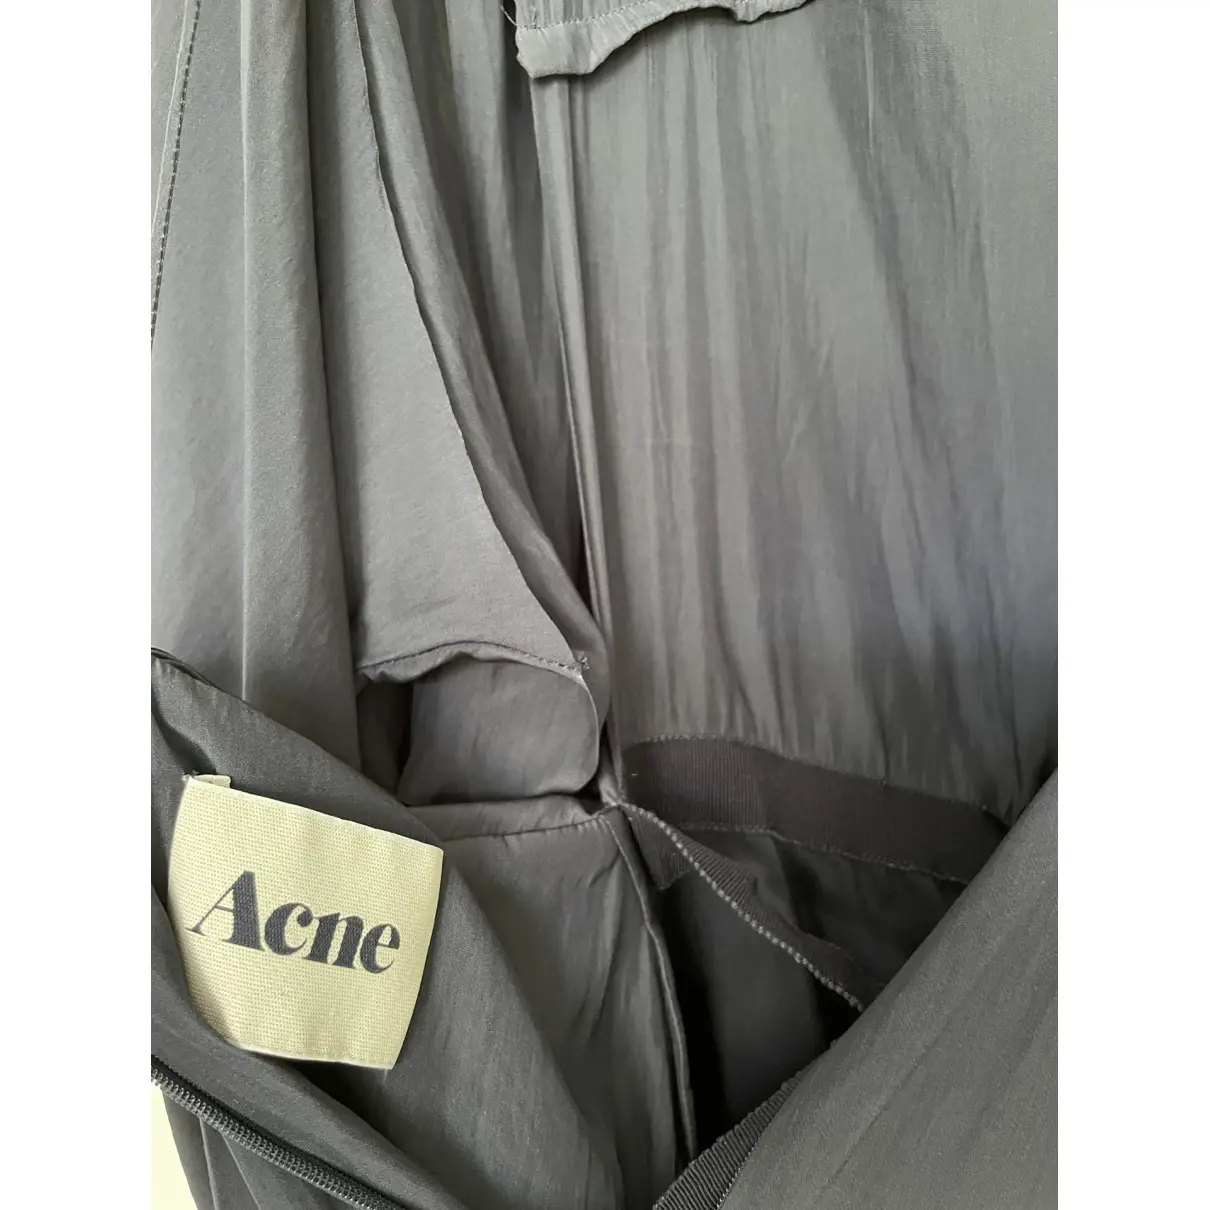 Buy Acne Studios Maxi dress online